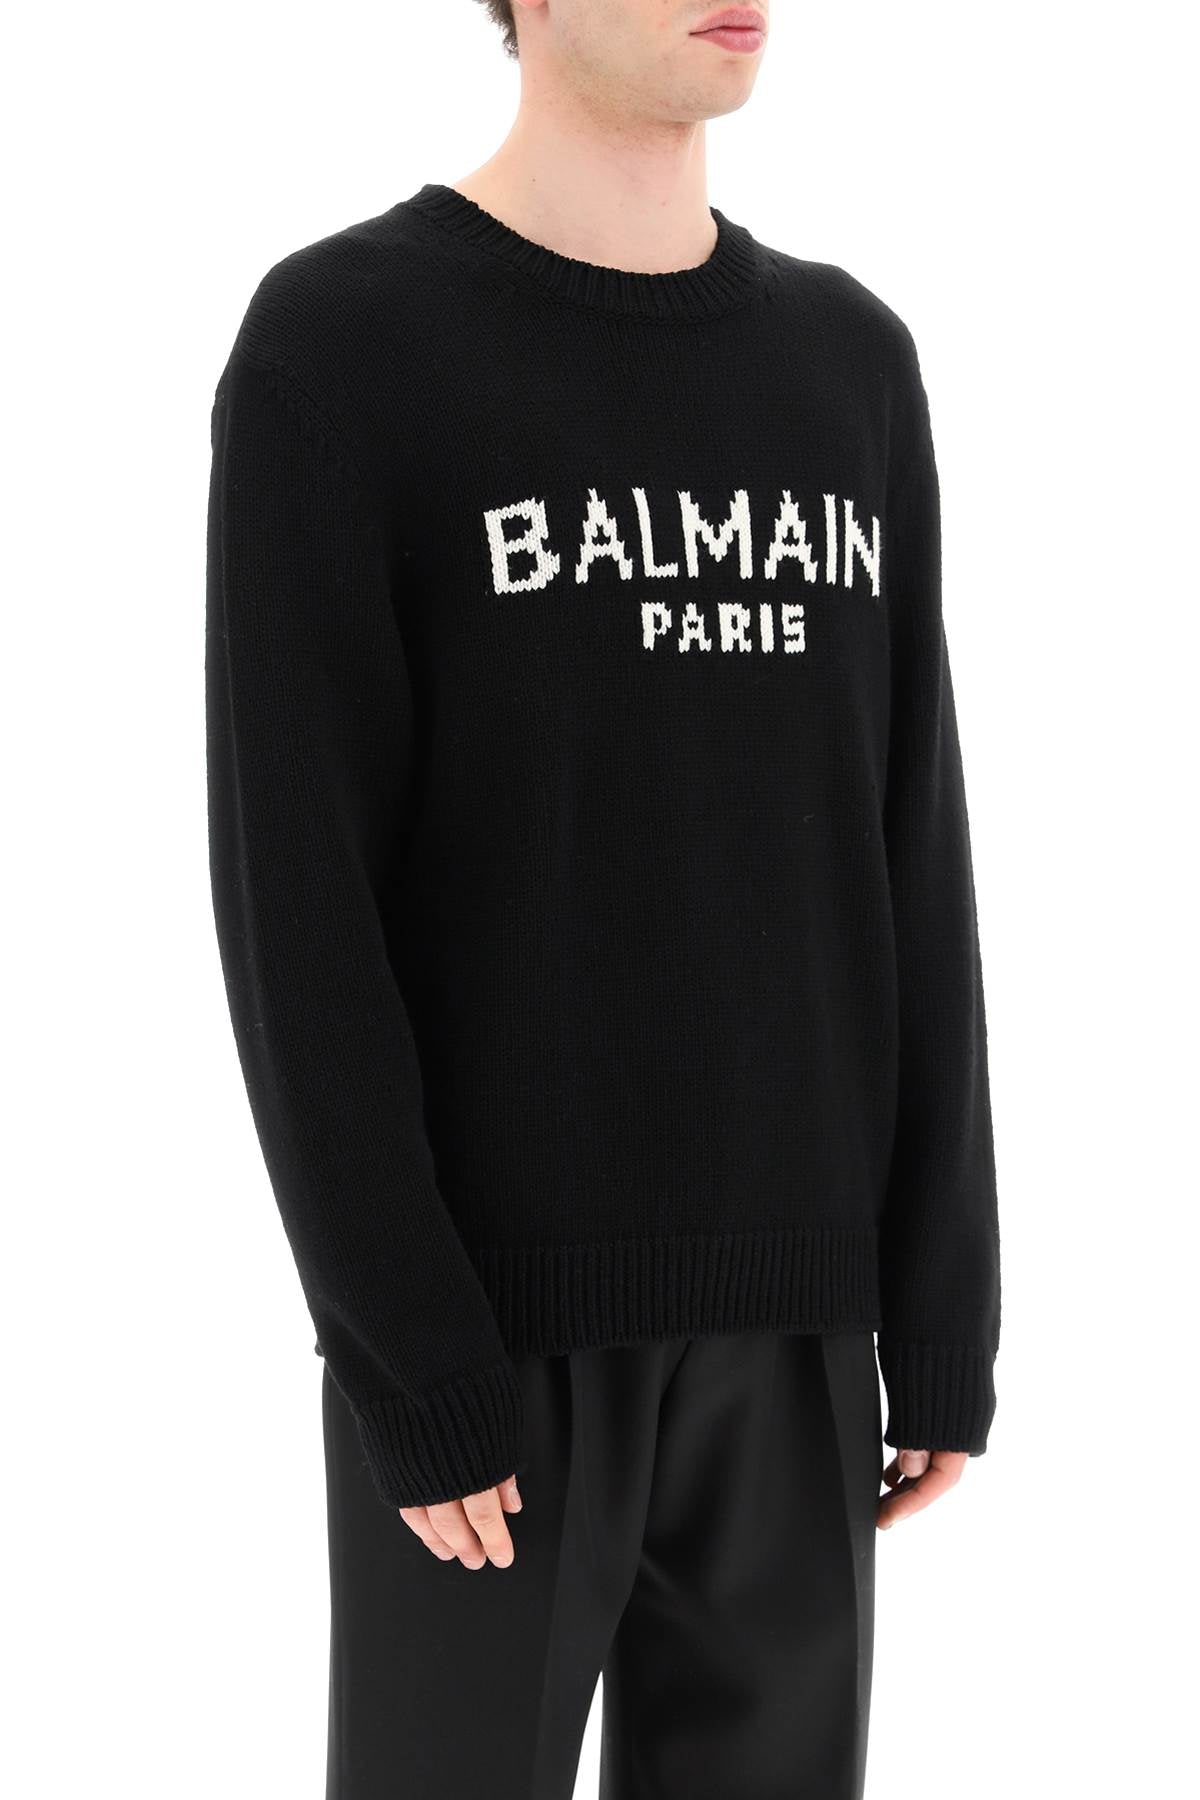 Balmain Balmain jacquard logo sweater